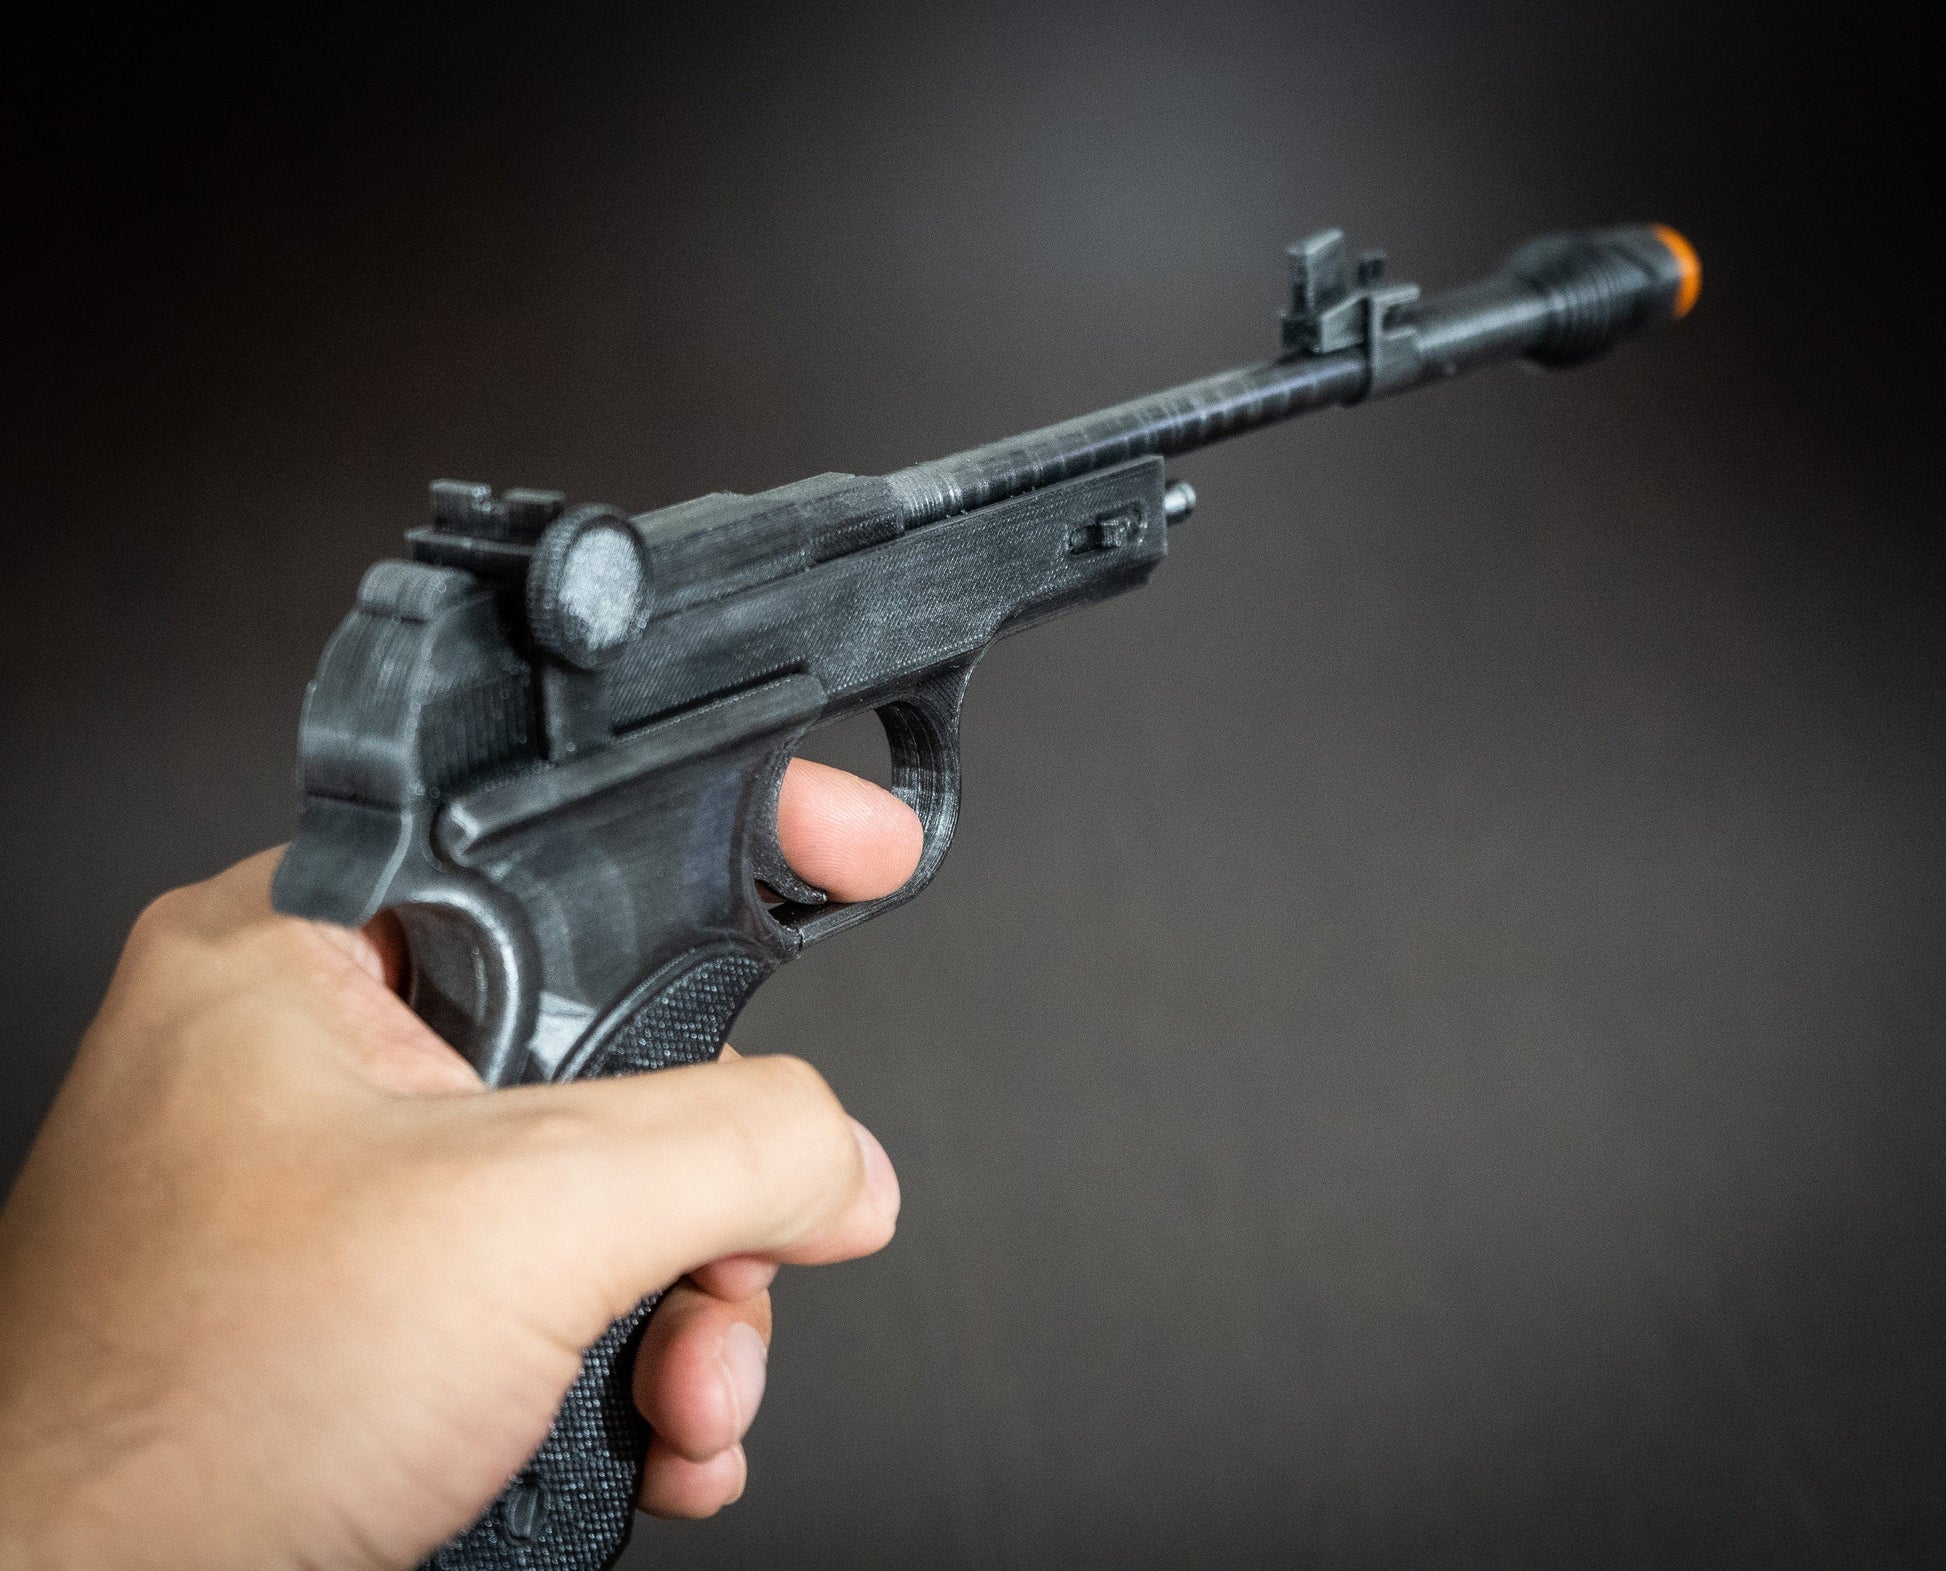 Princess Leia blaster replica | Star Wars Replica Leia gun | Star Wars Props | Star Wars Cosplay - 3DPrintProps